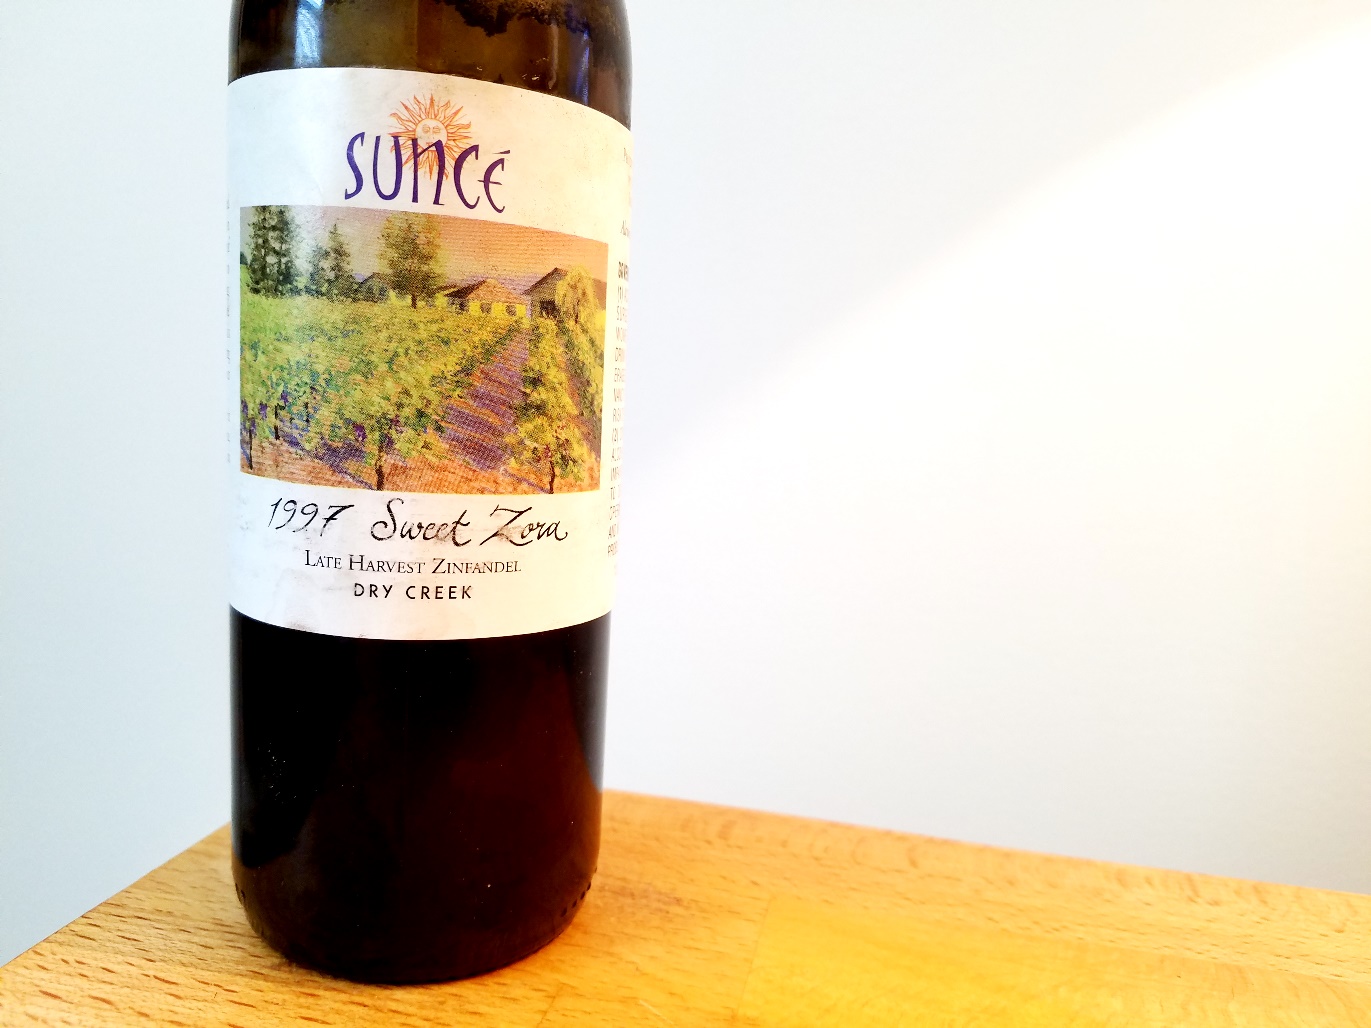 Sunce Winery, Sweet Zora Late Harvest Zinfandel 1997, Dry Creek, California, Wine Casual